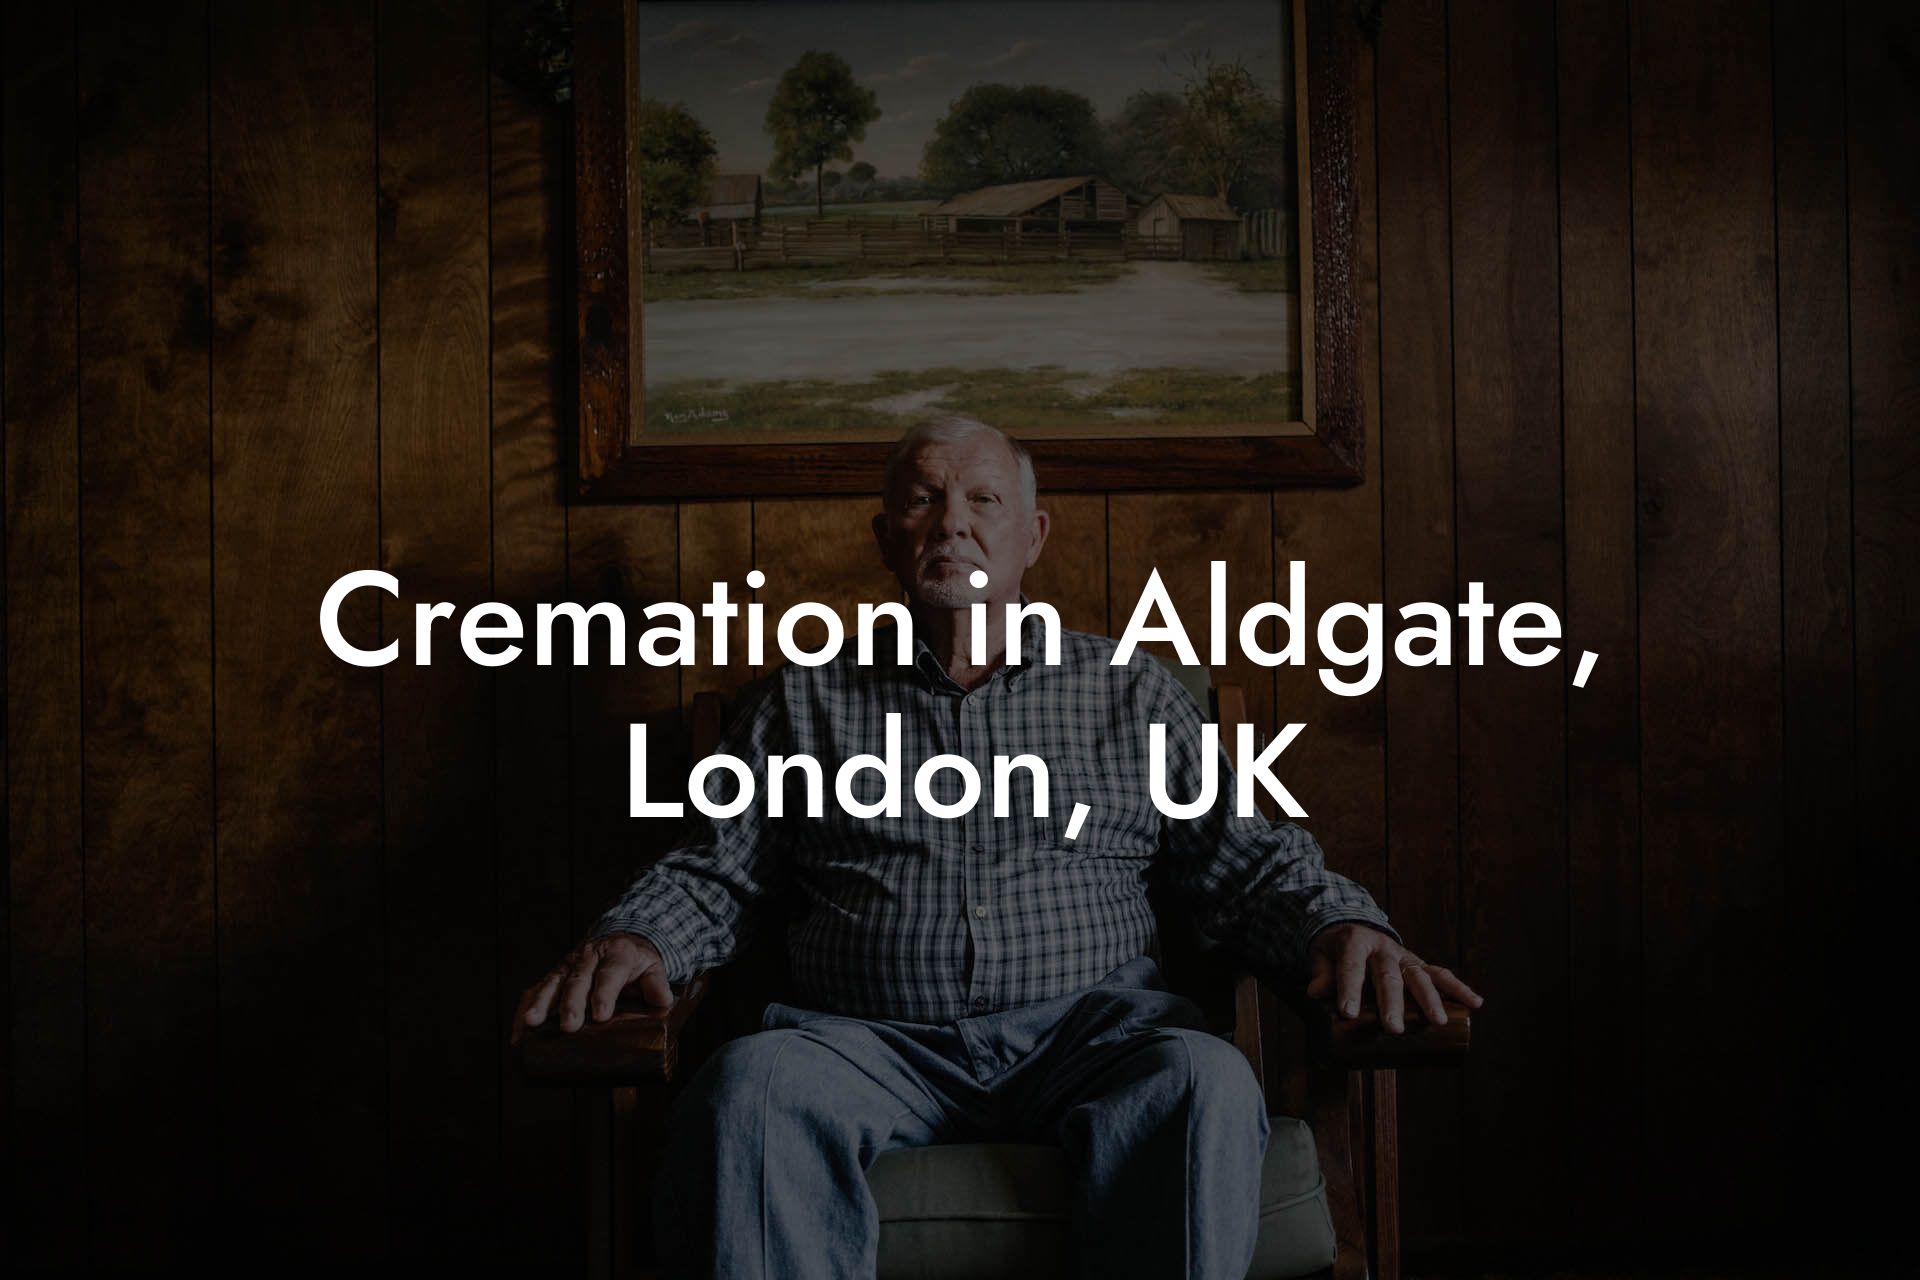 Cremation in Aldgate, London, UK